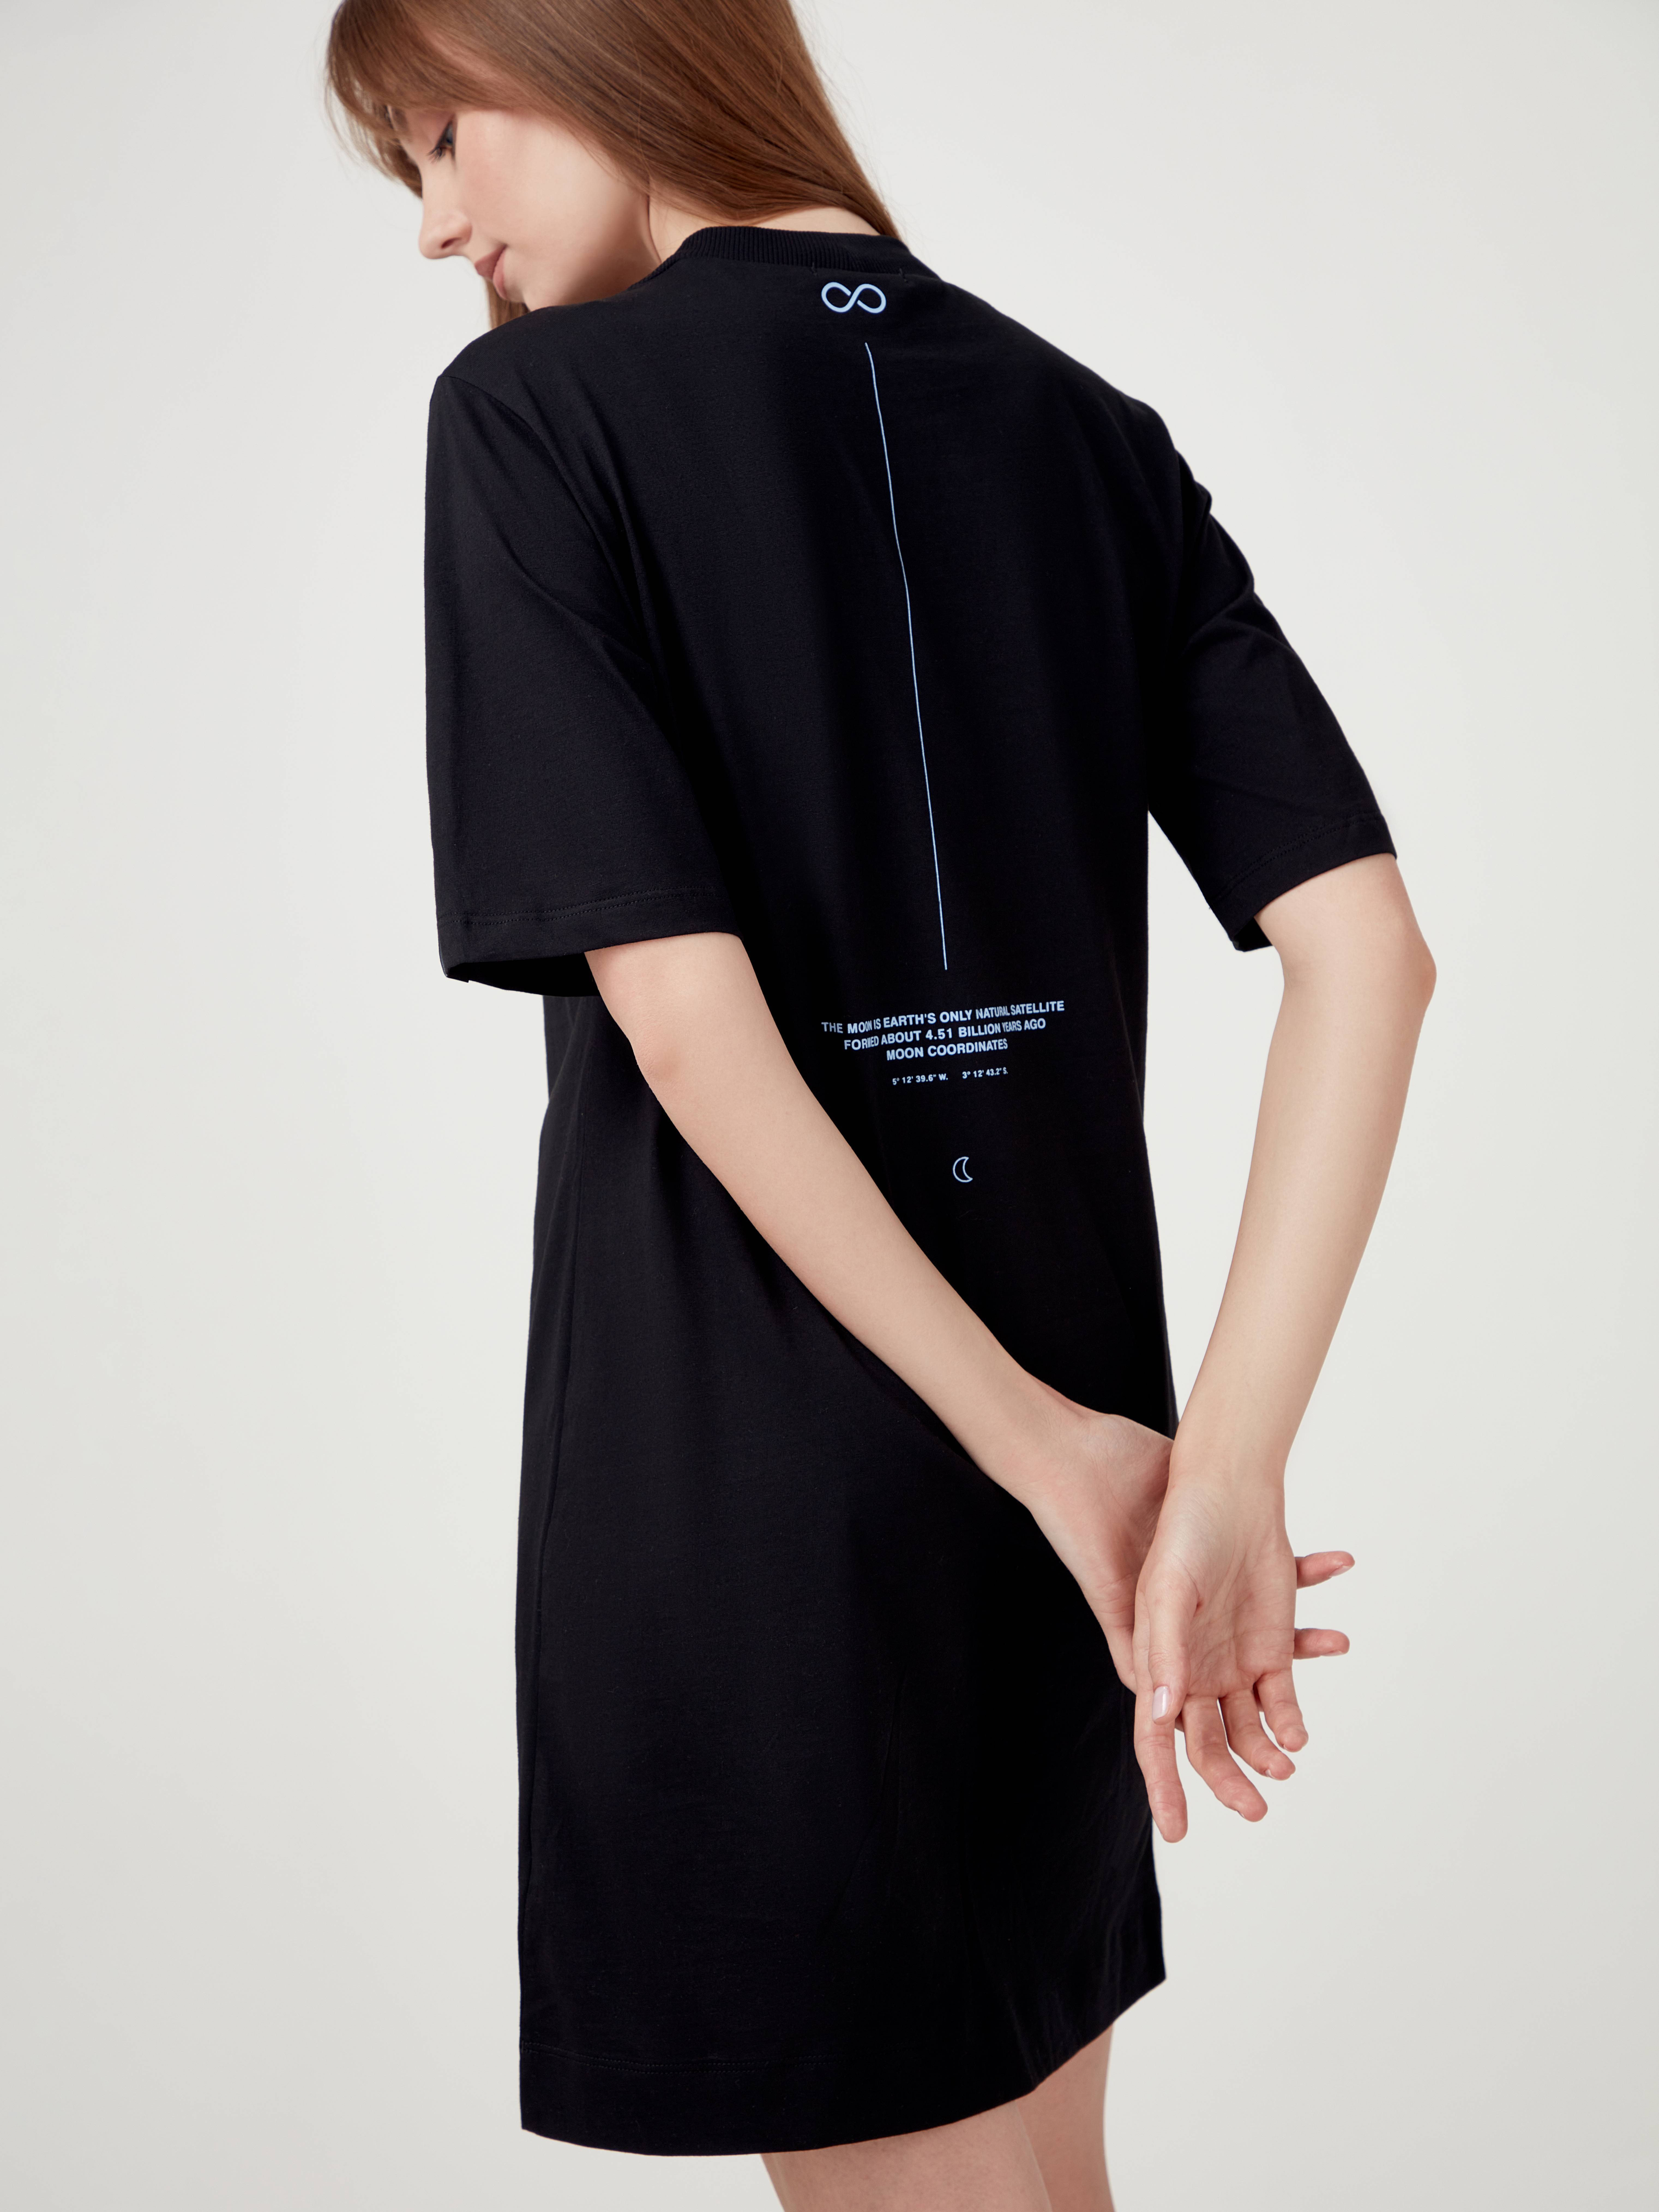 Платье из хлопка «Girl from the moon» LPL 1684 Conte ⭐️, цвет black, размер 170-84-90/xs - фото 1